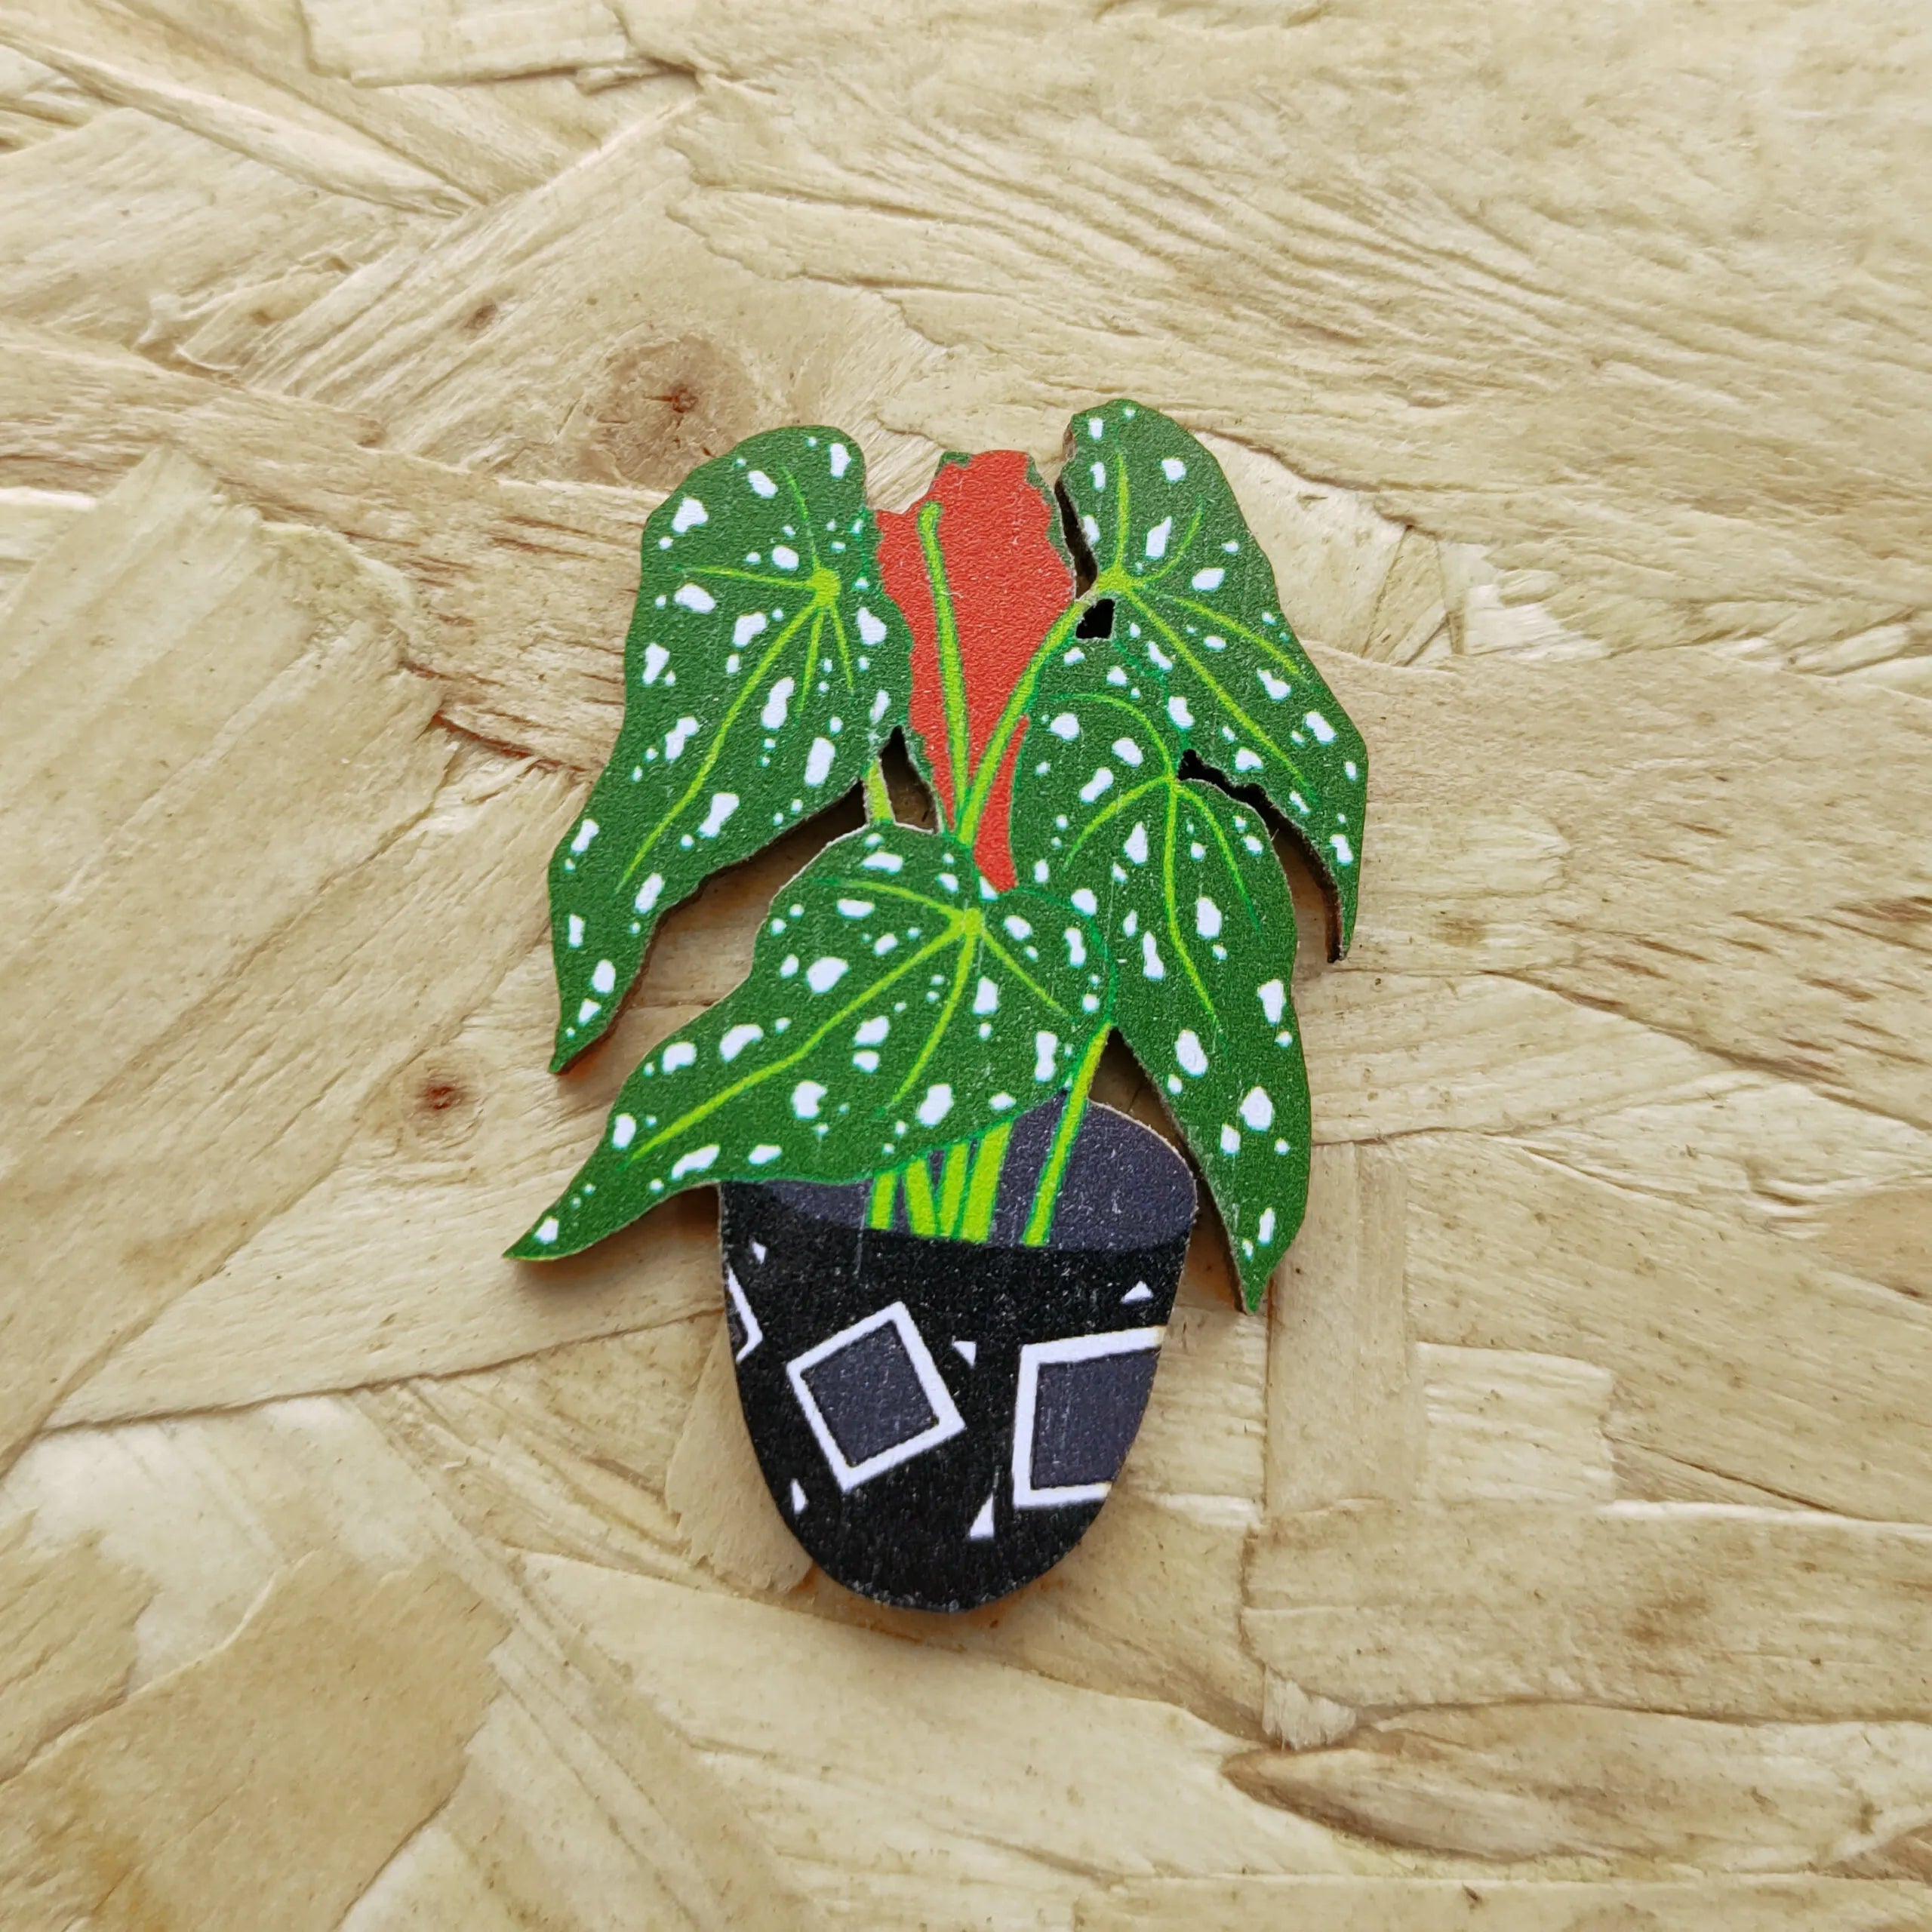 Begonia Pin - The Nancy Smillie Shop - Art, Jewellery & Designer Gifts Glasgow